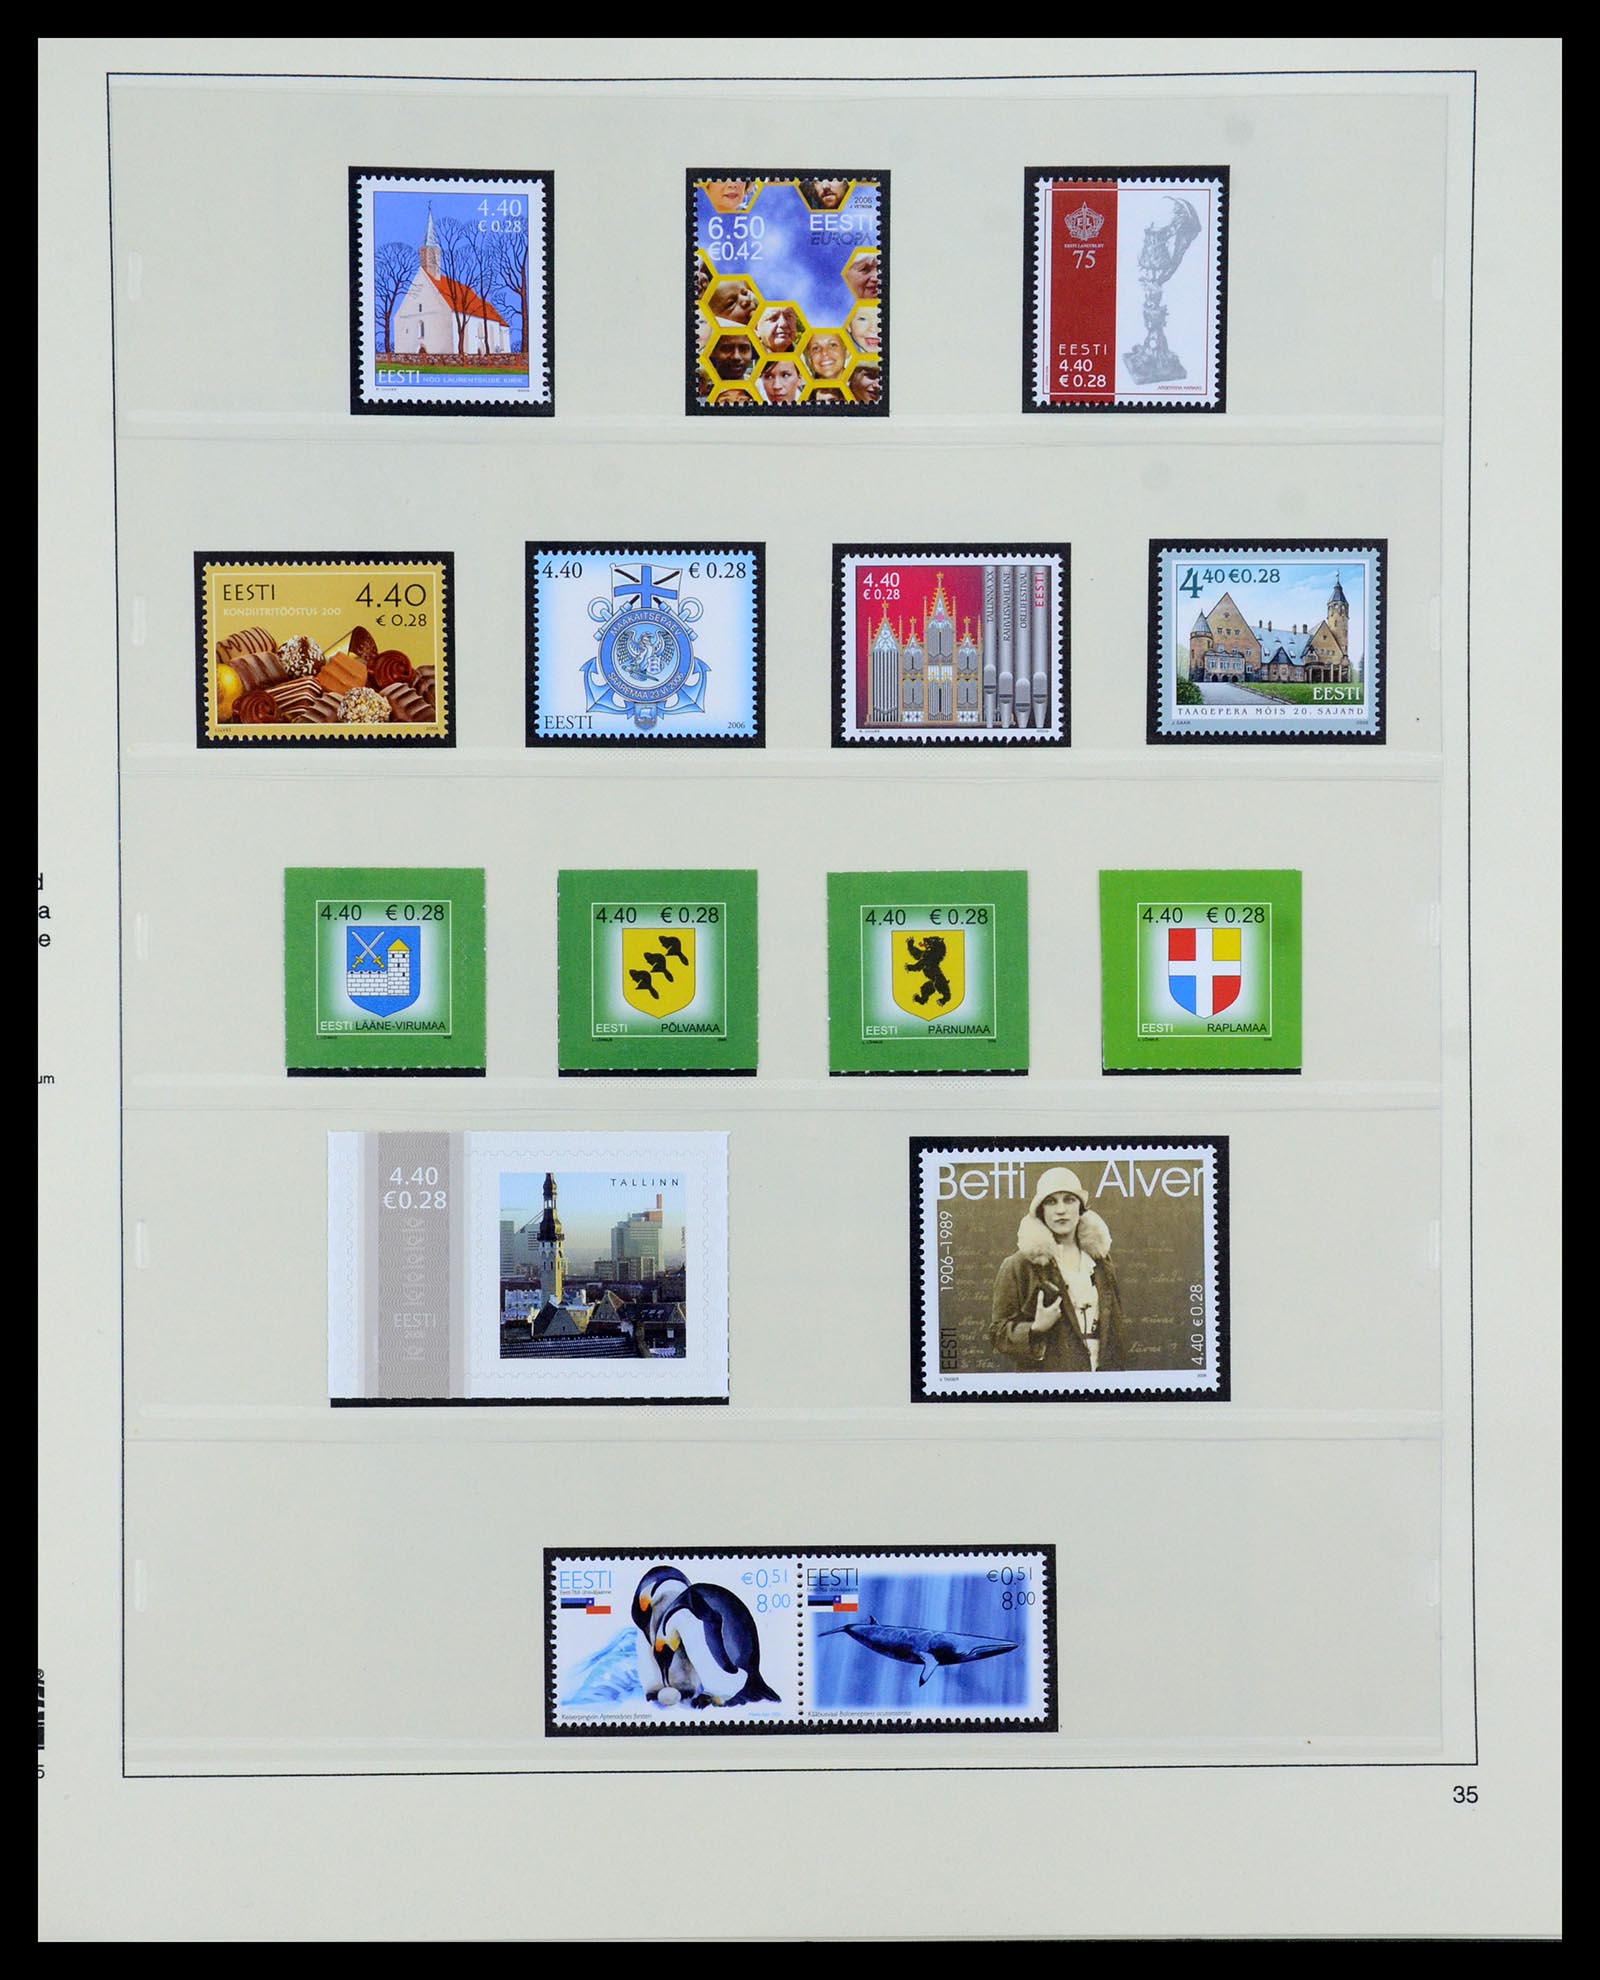 35454 035 - Stamp Collection 35454 Estonia 1991-2012.